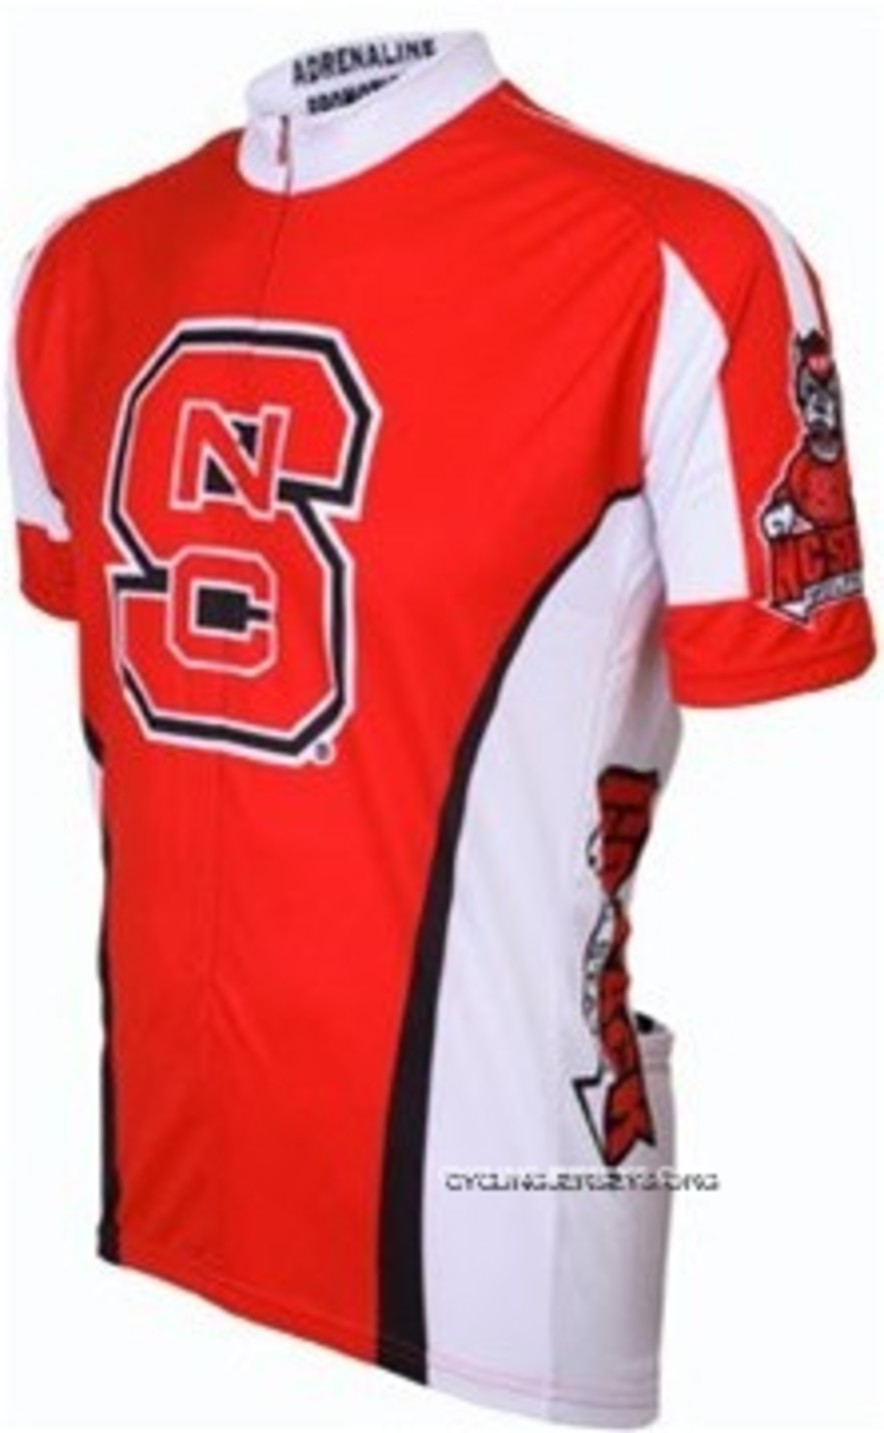 North Carolina State University Wolfpack Cycling Short Sleeve Jersey Online